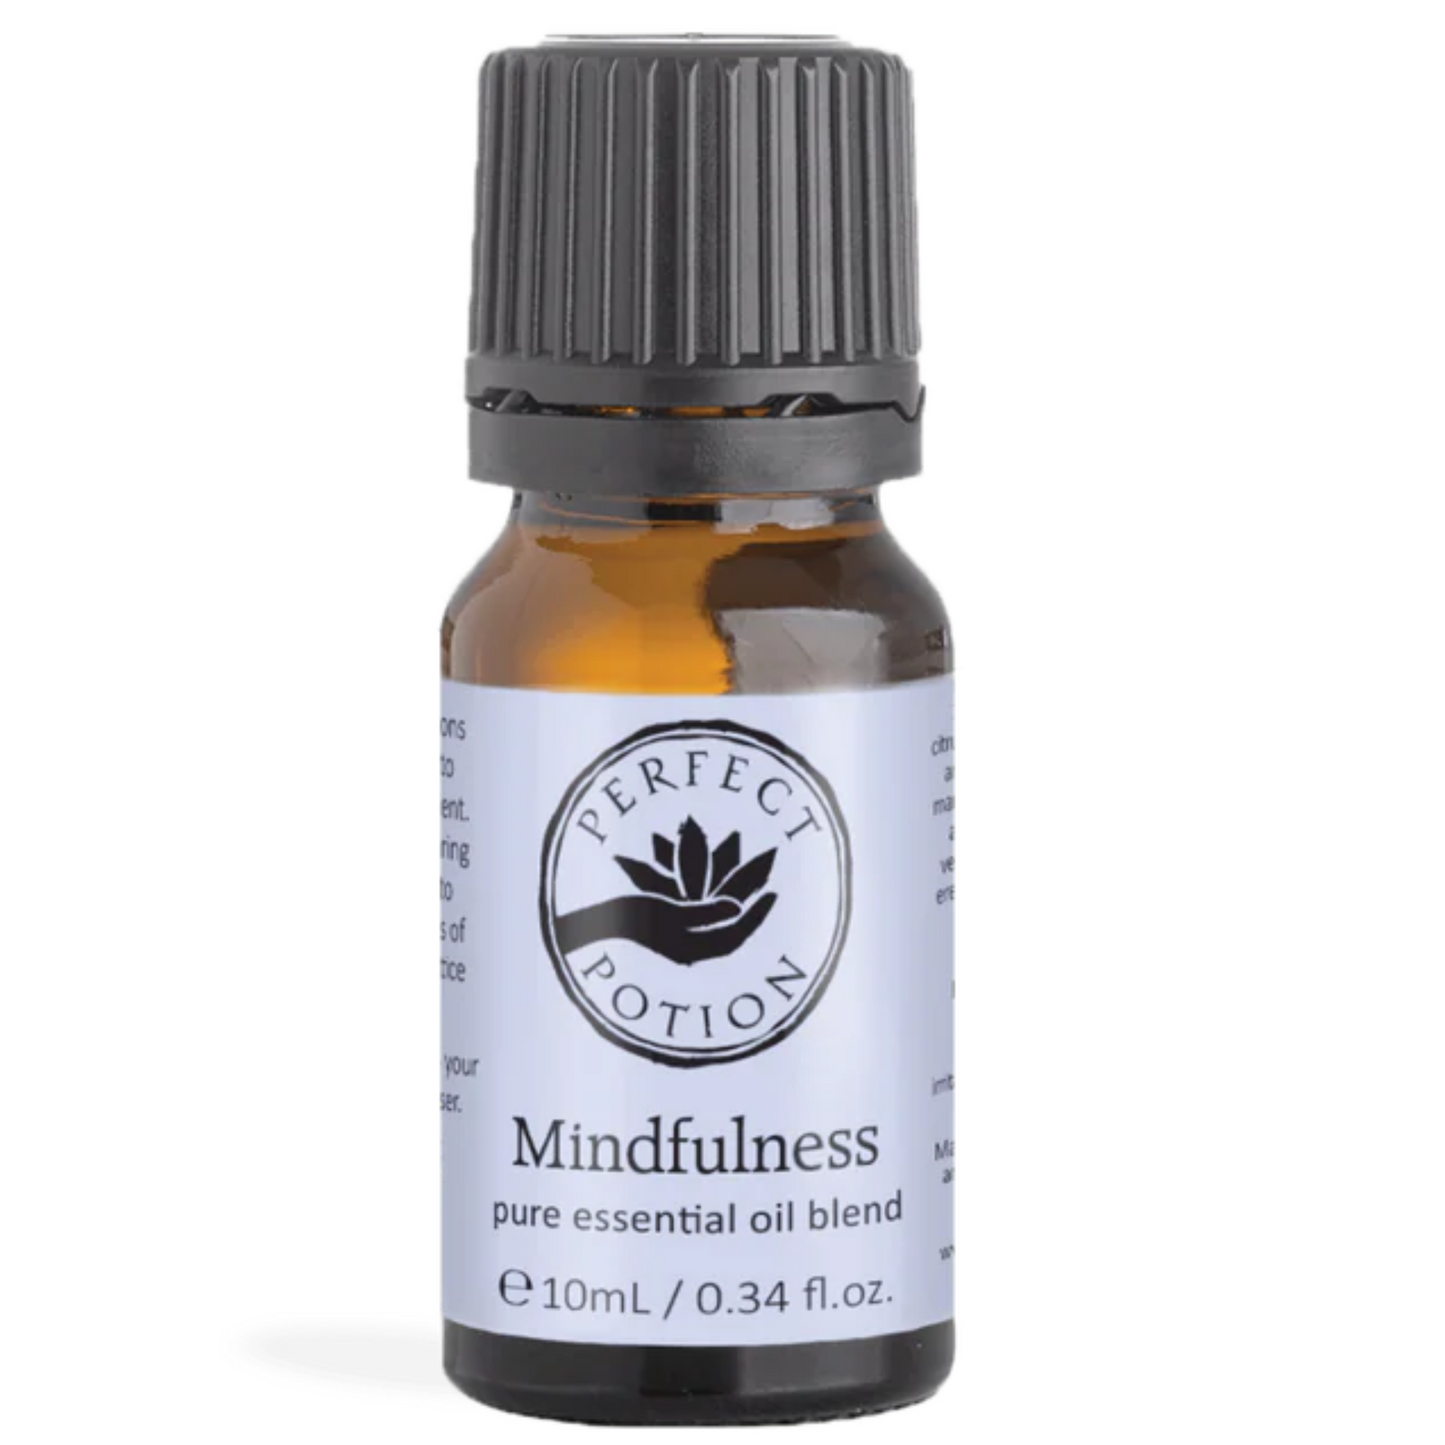 Mindfulness Essential Oil Blend